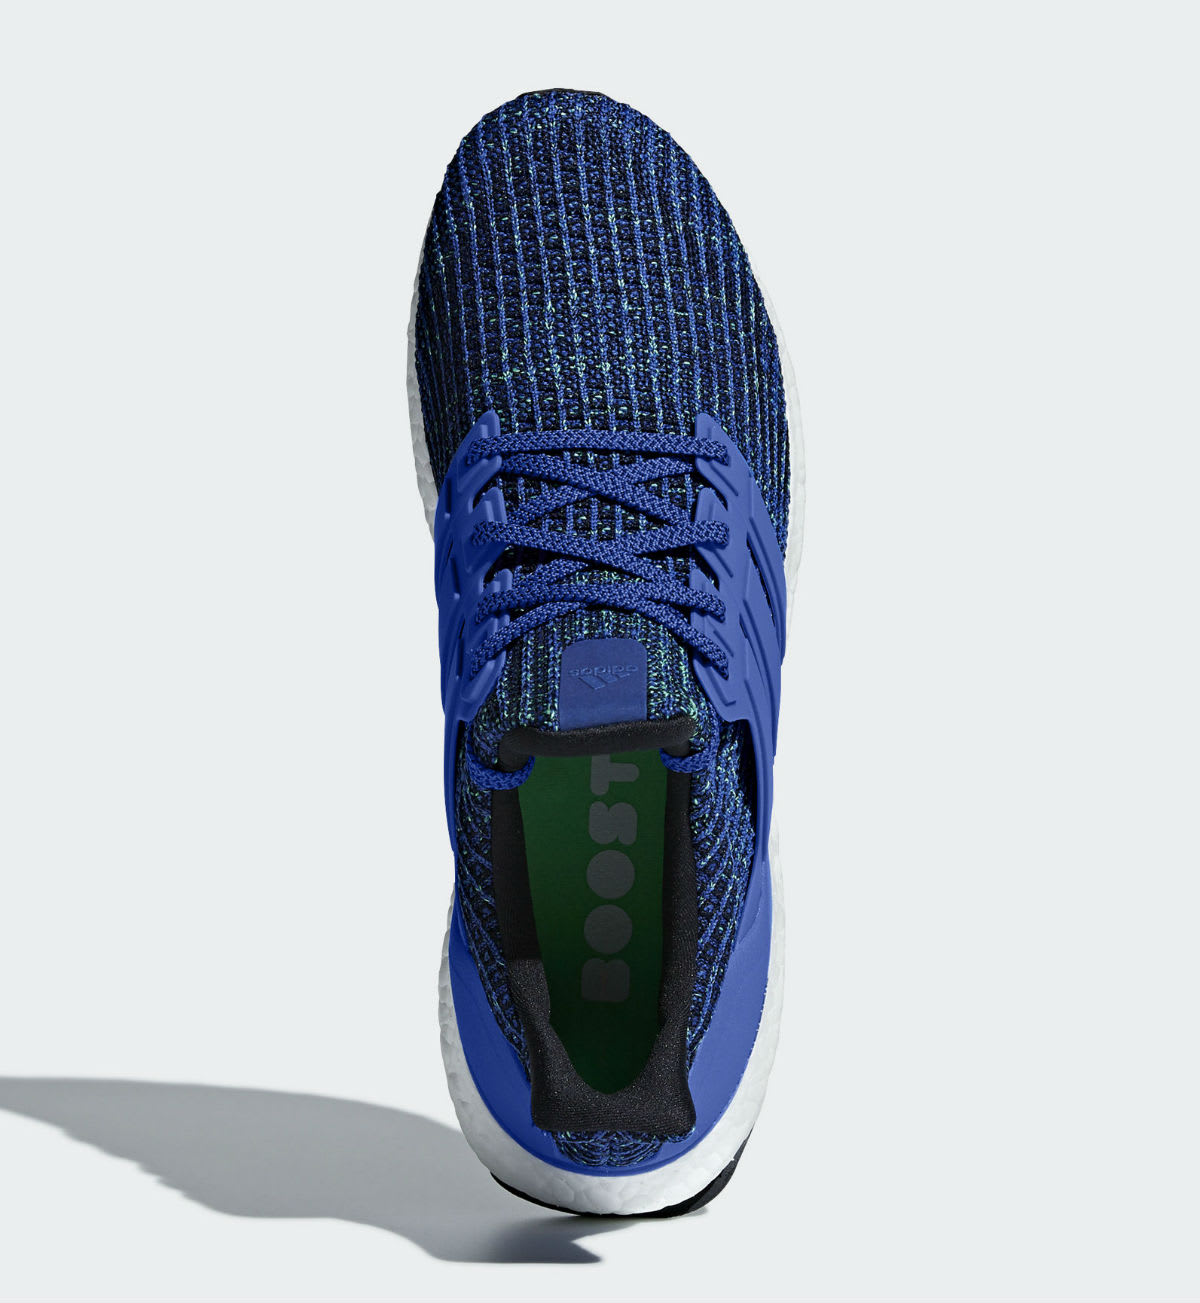 Adidas Ultra Boost 4.0 Hi Res Blue Release Date CM8112 Top